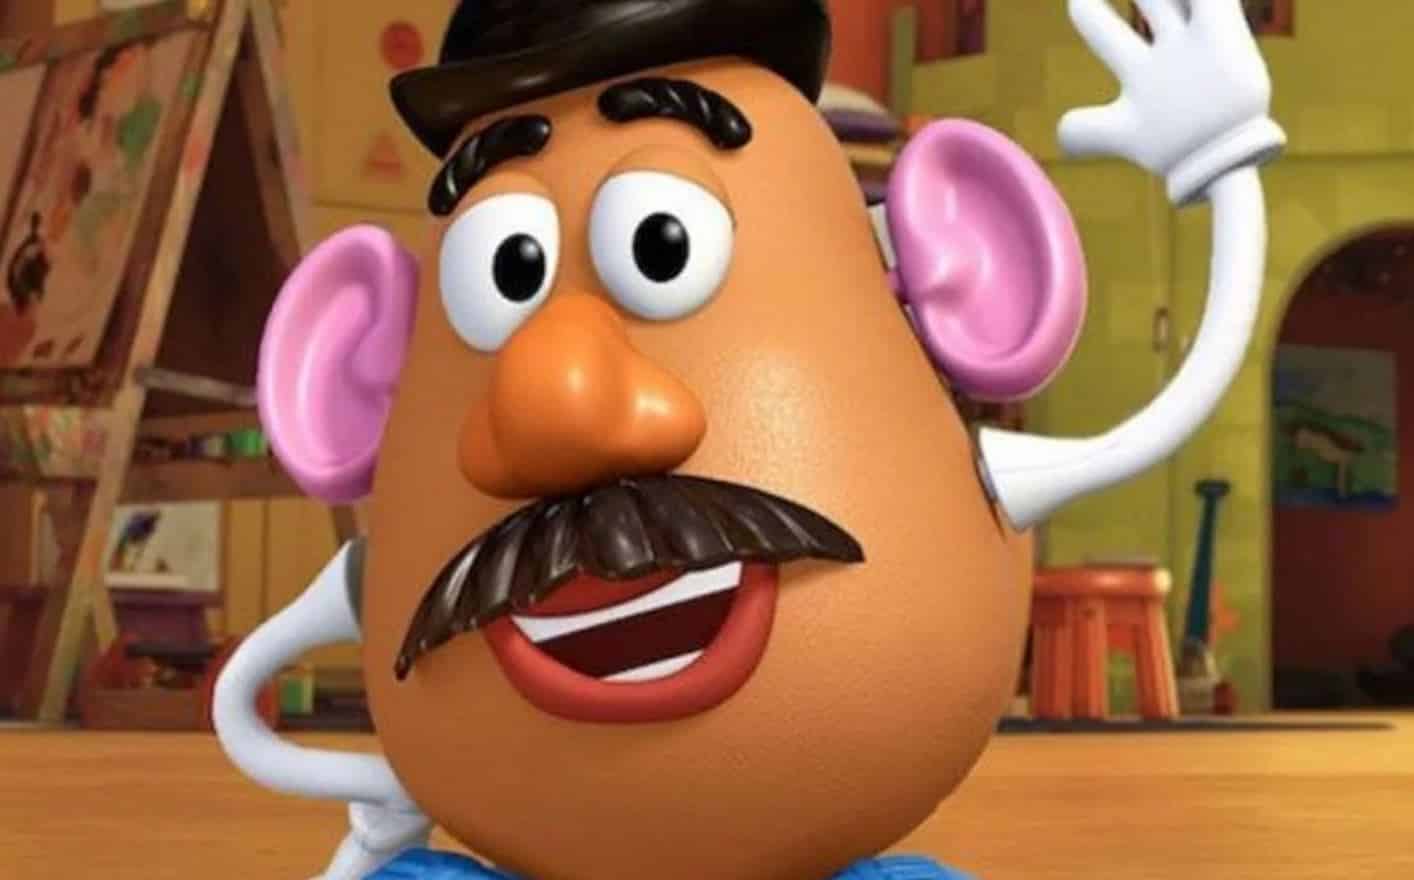 mr-potato-head